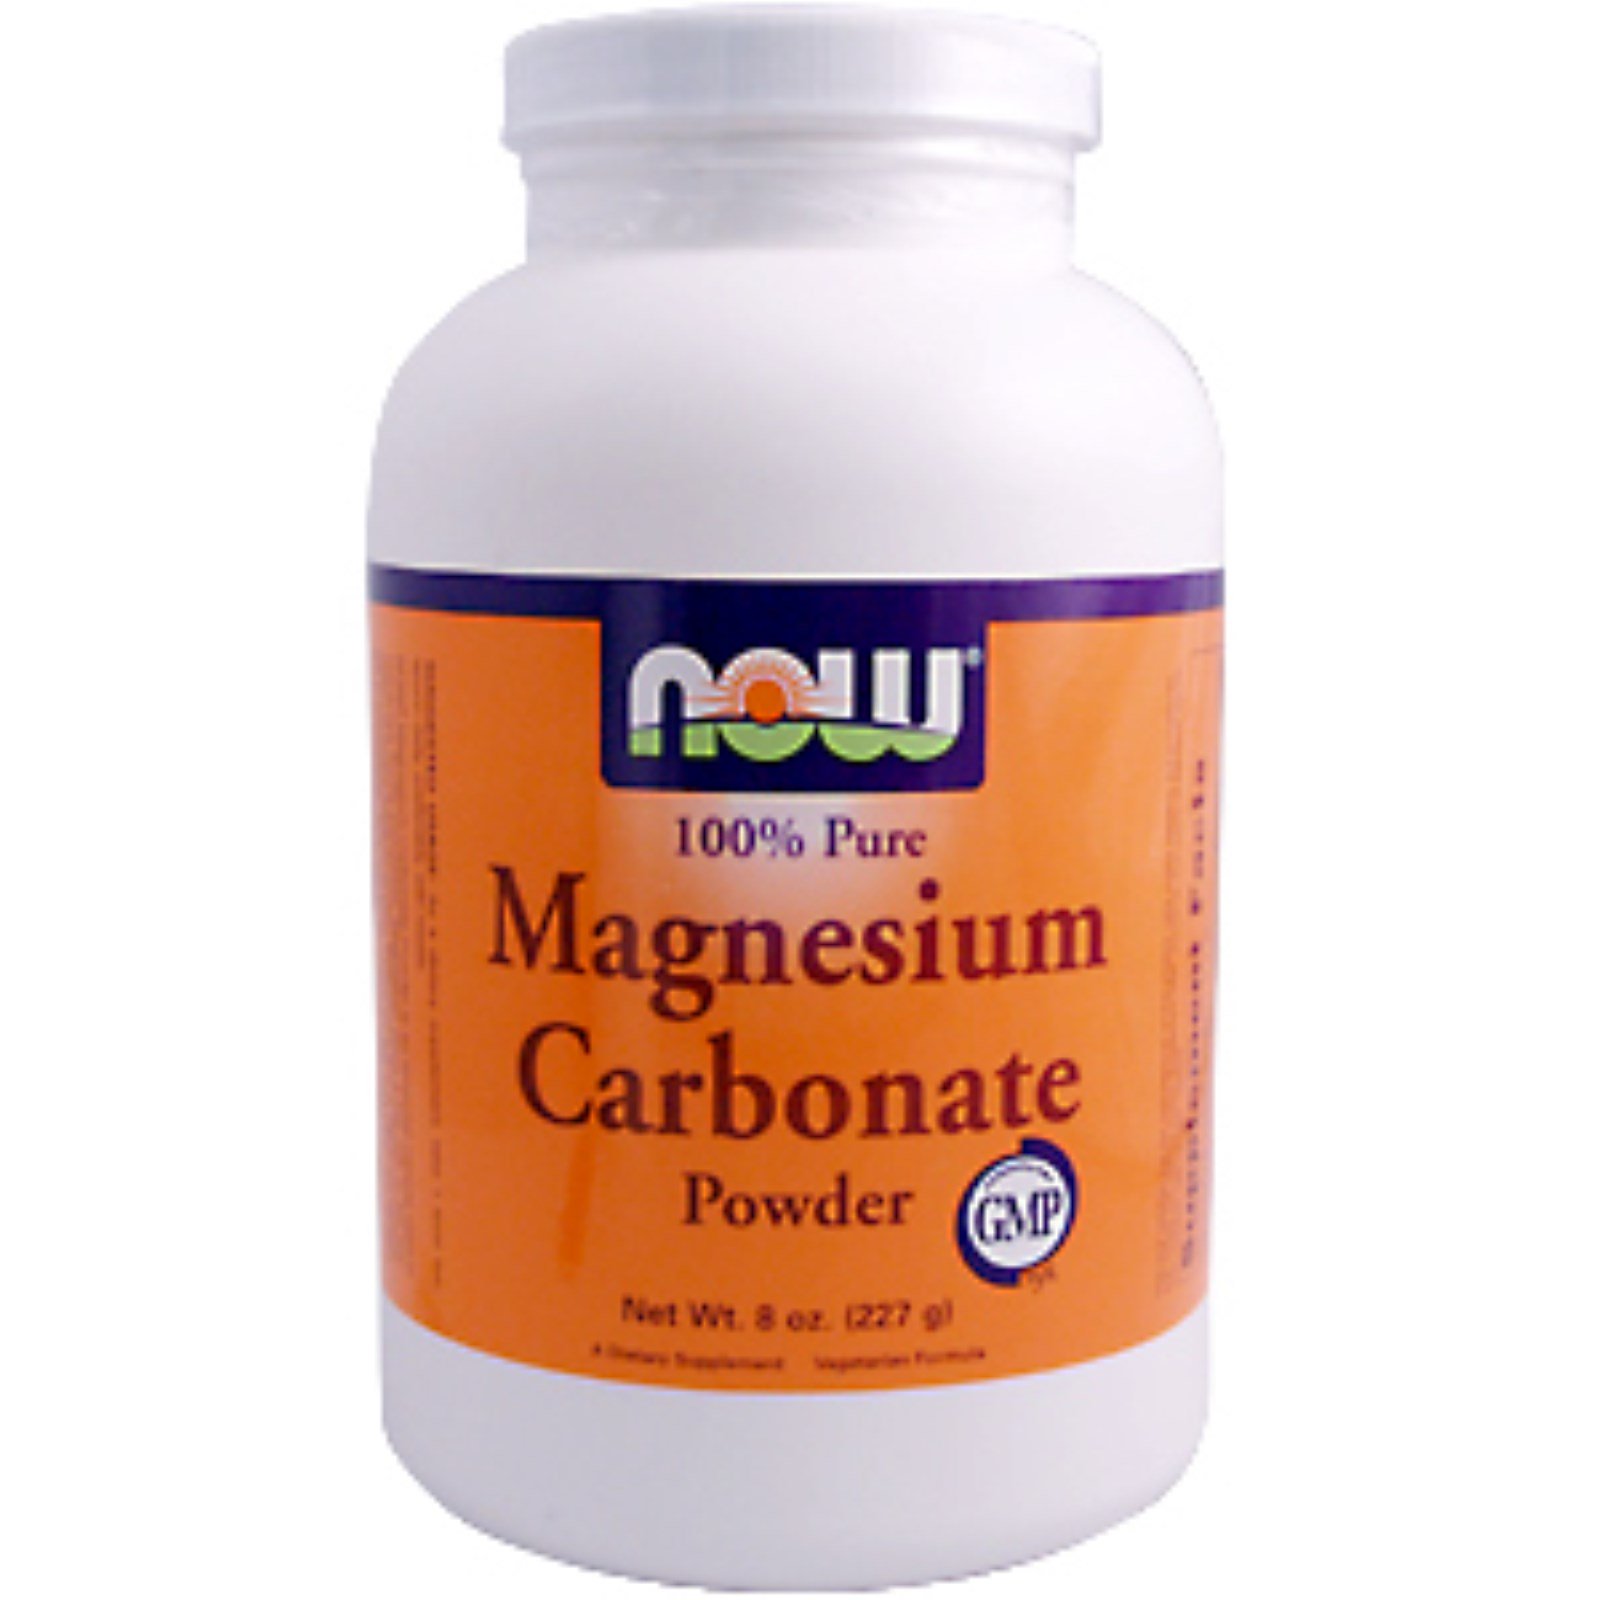 magnesium carbonate nist webook